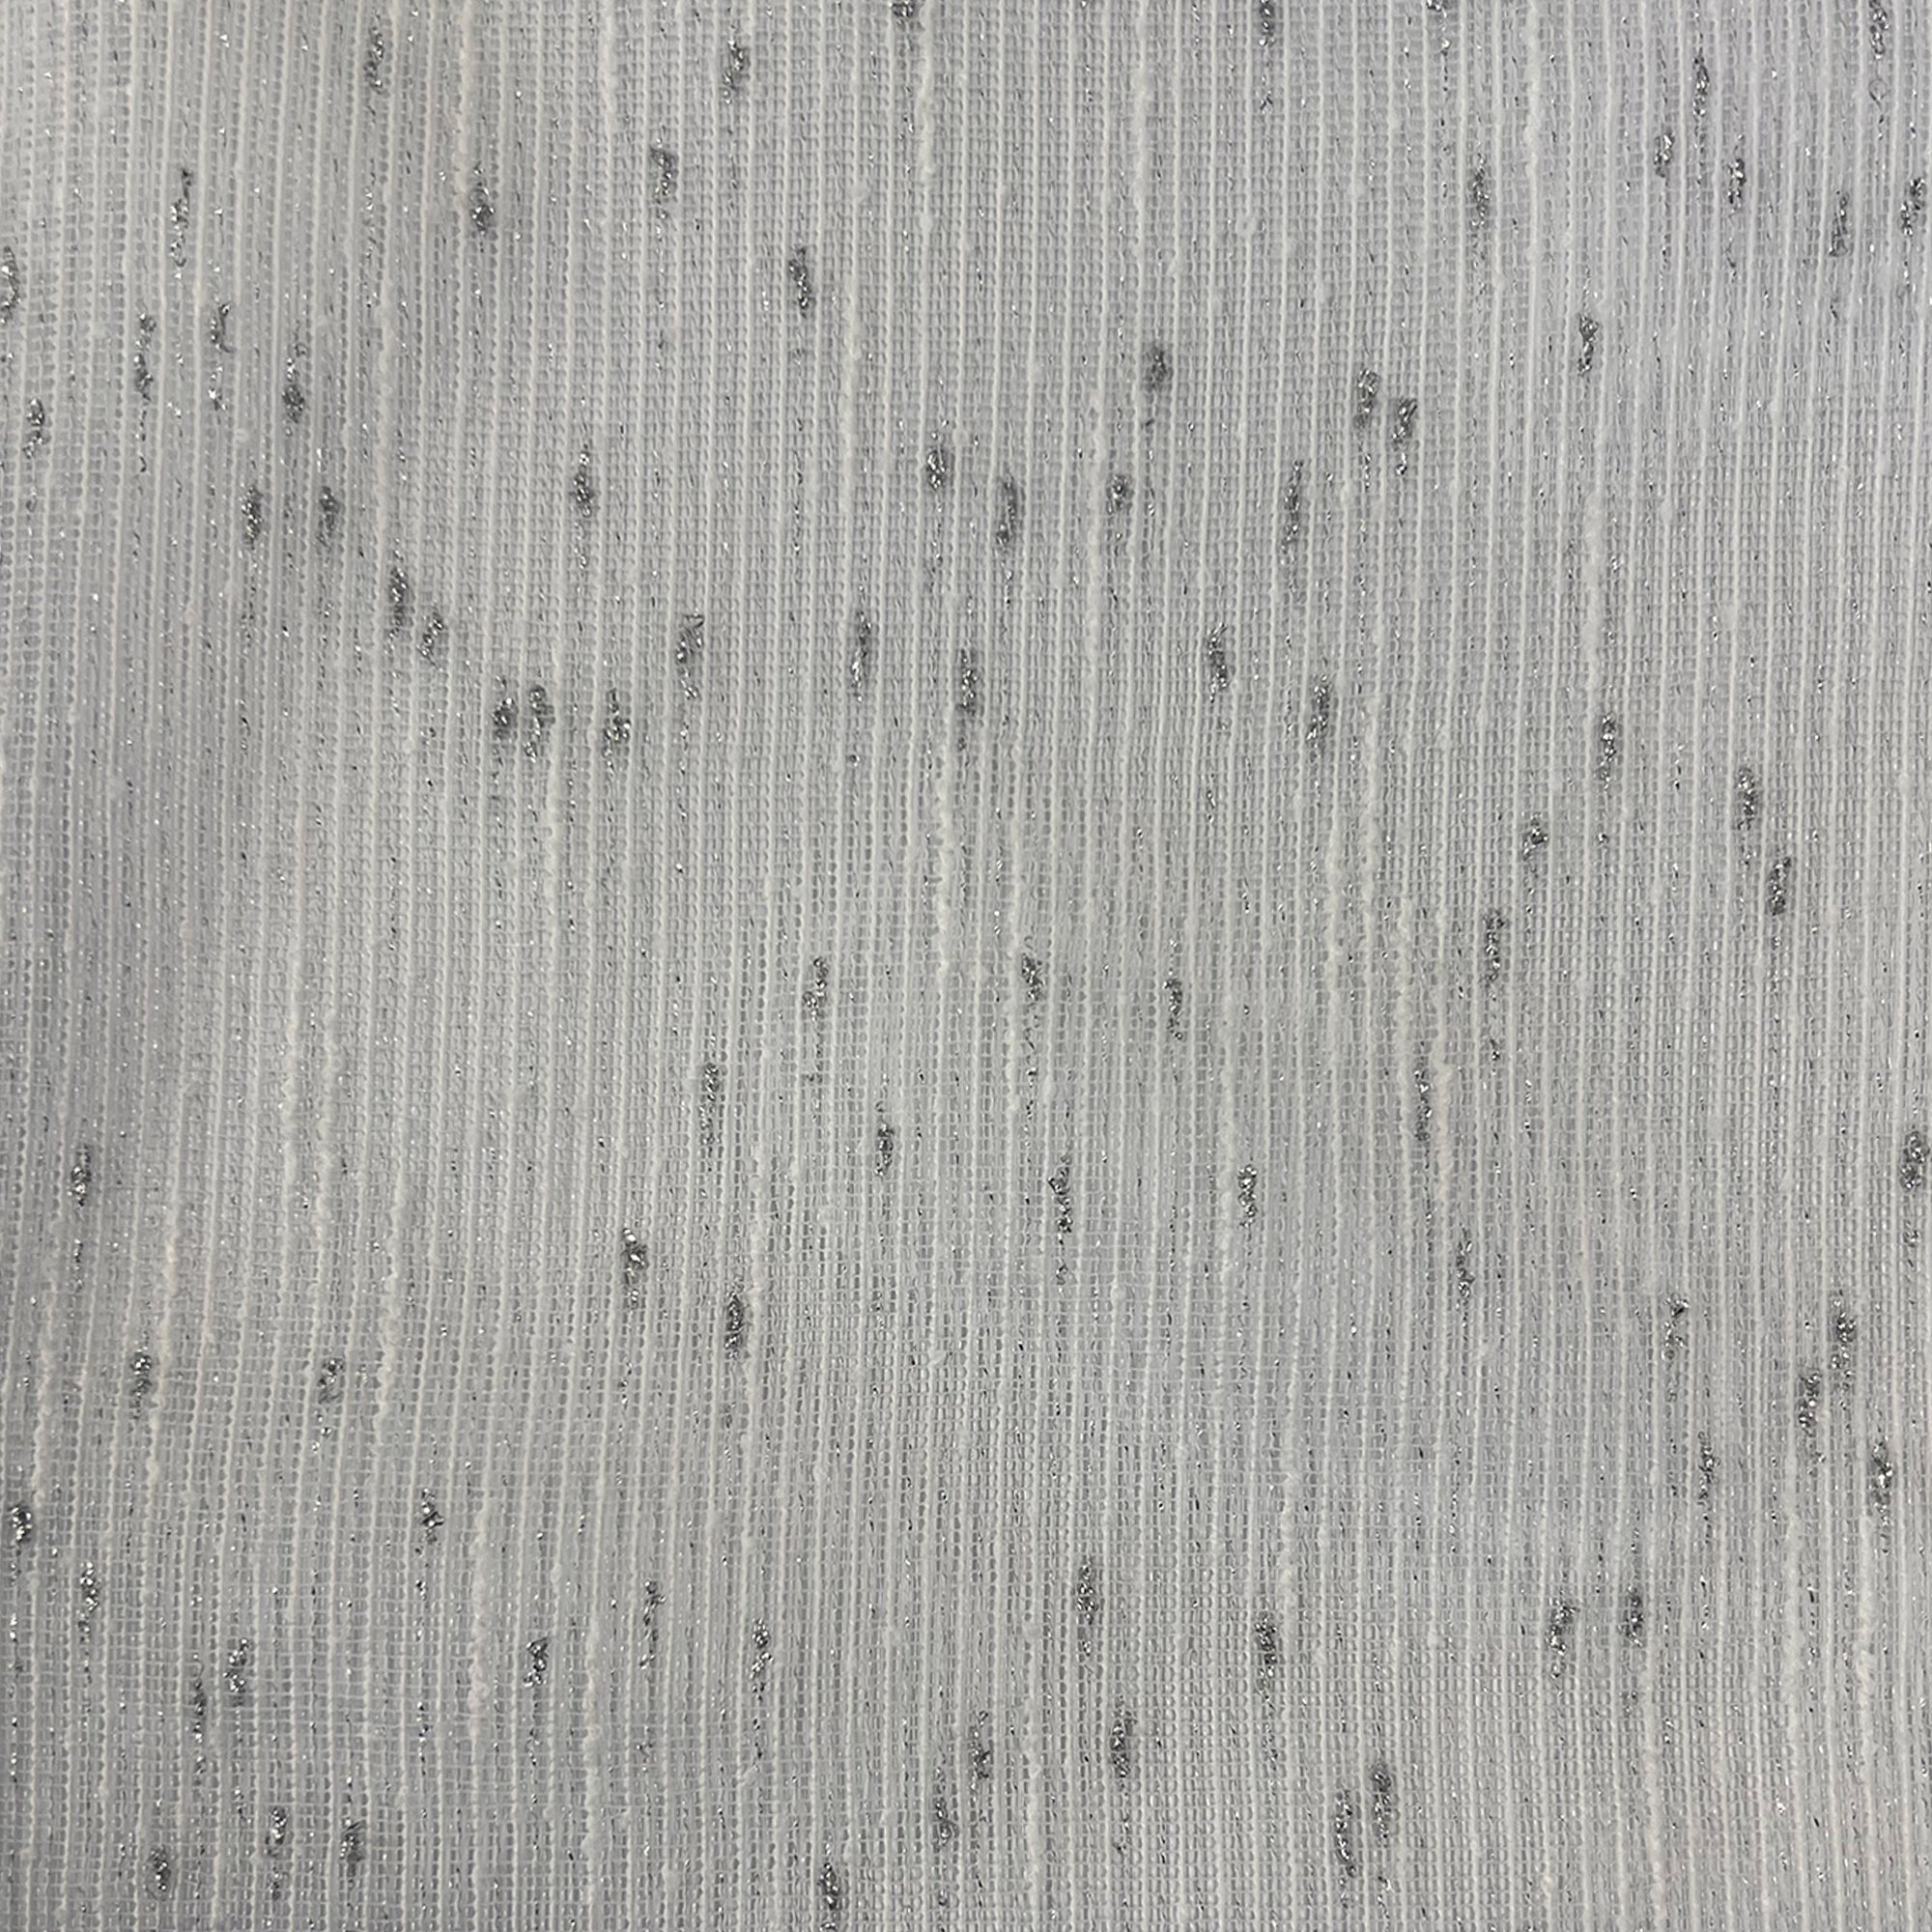 Orly Fabric | Textured Metallic Sheer